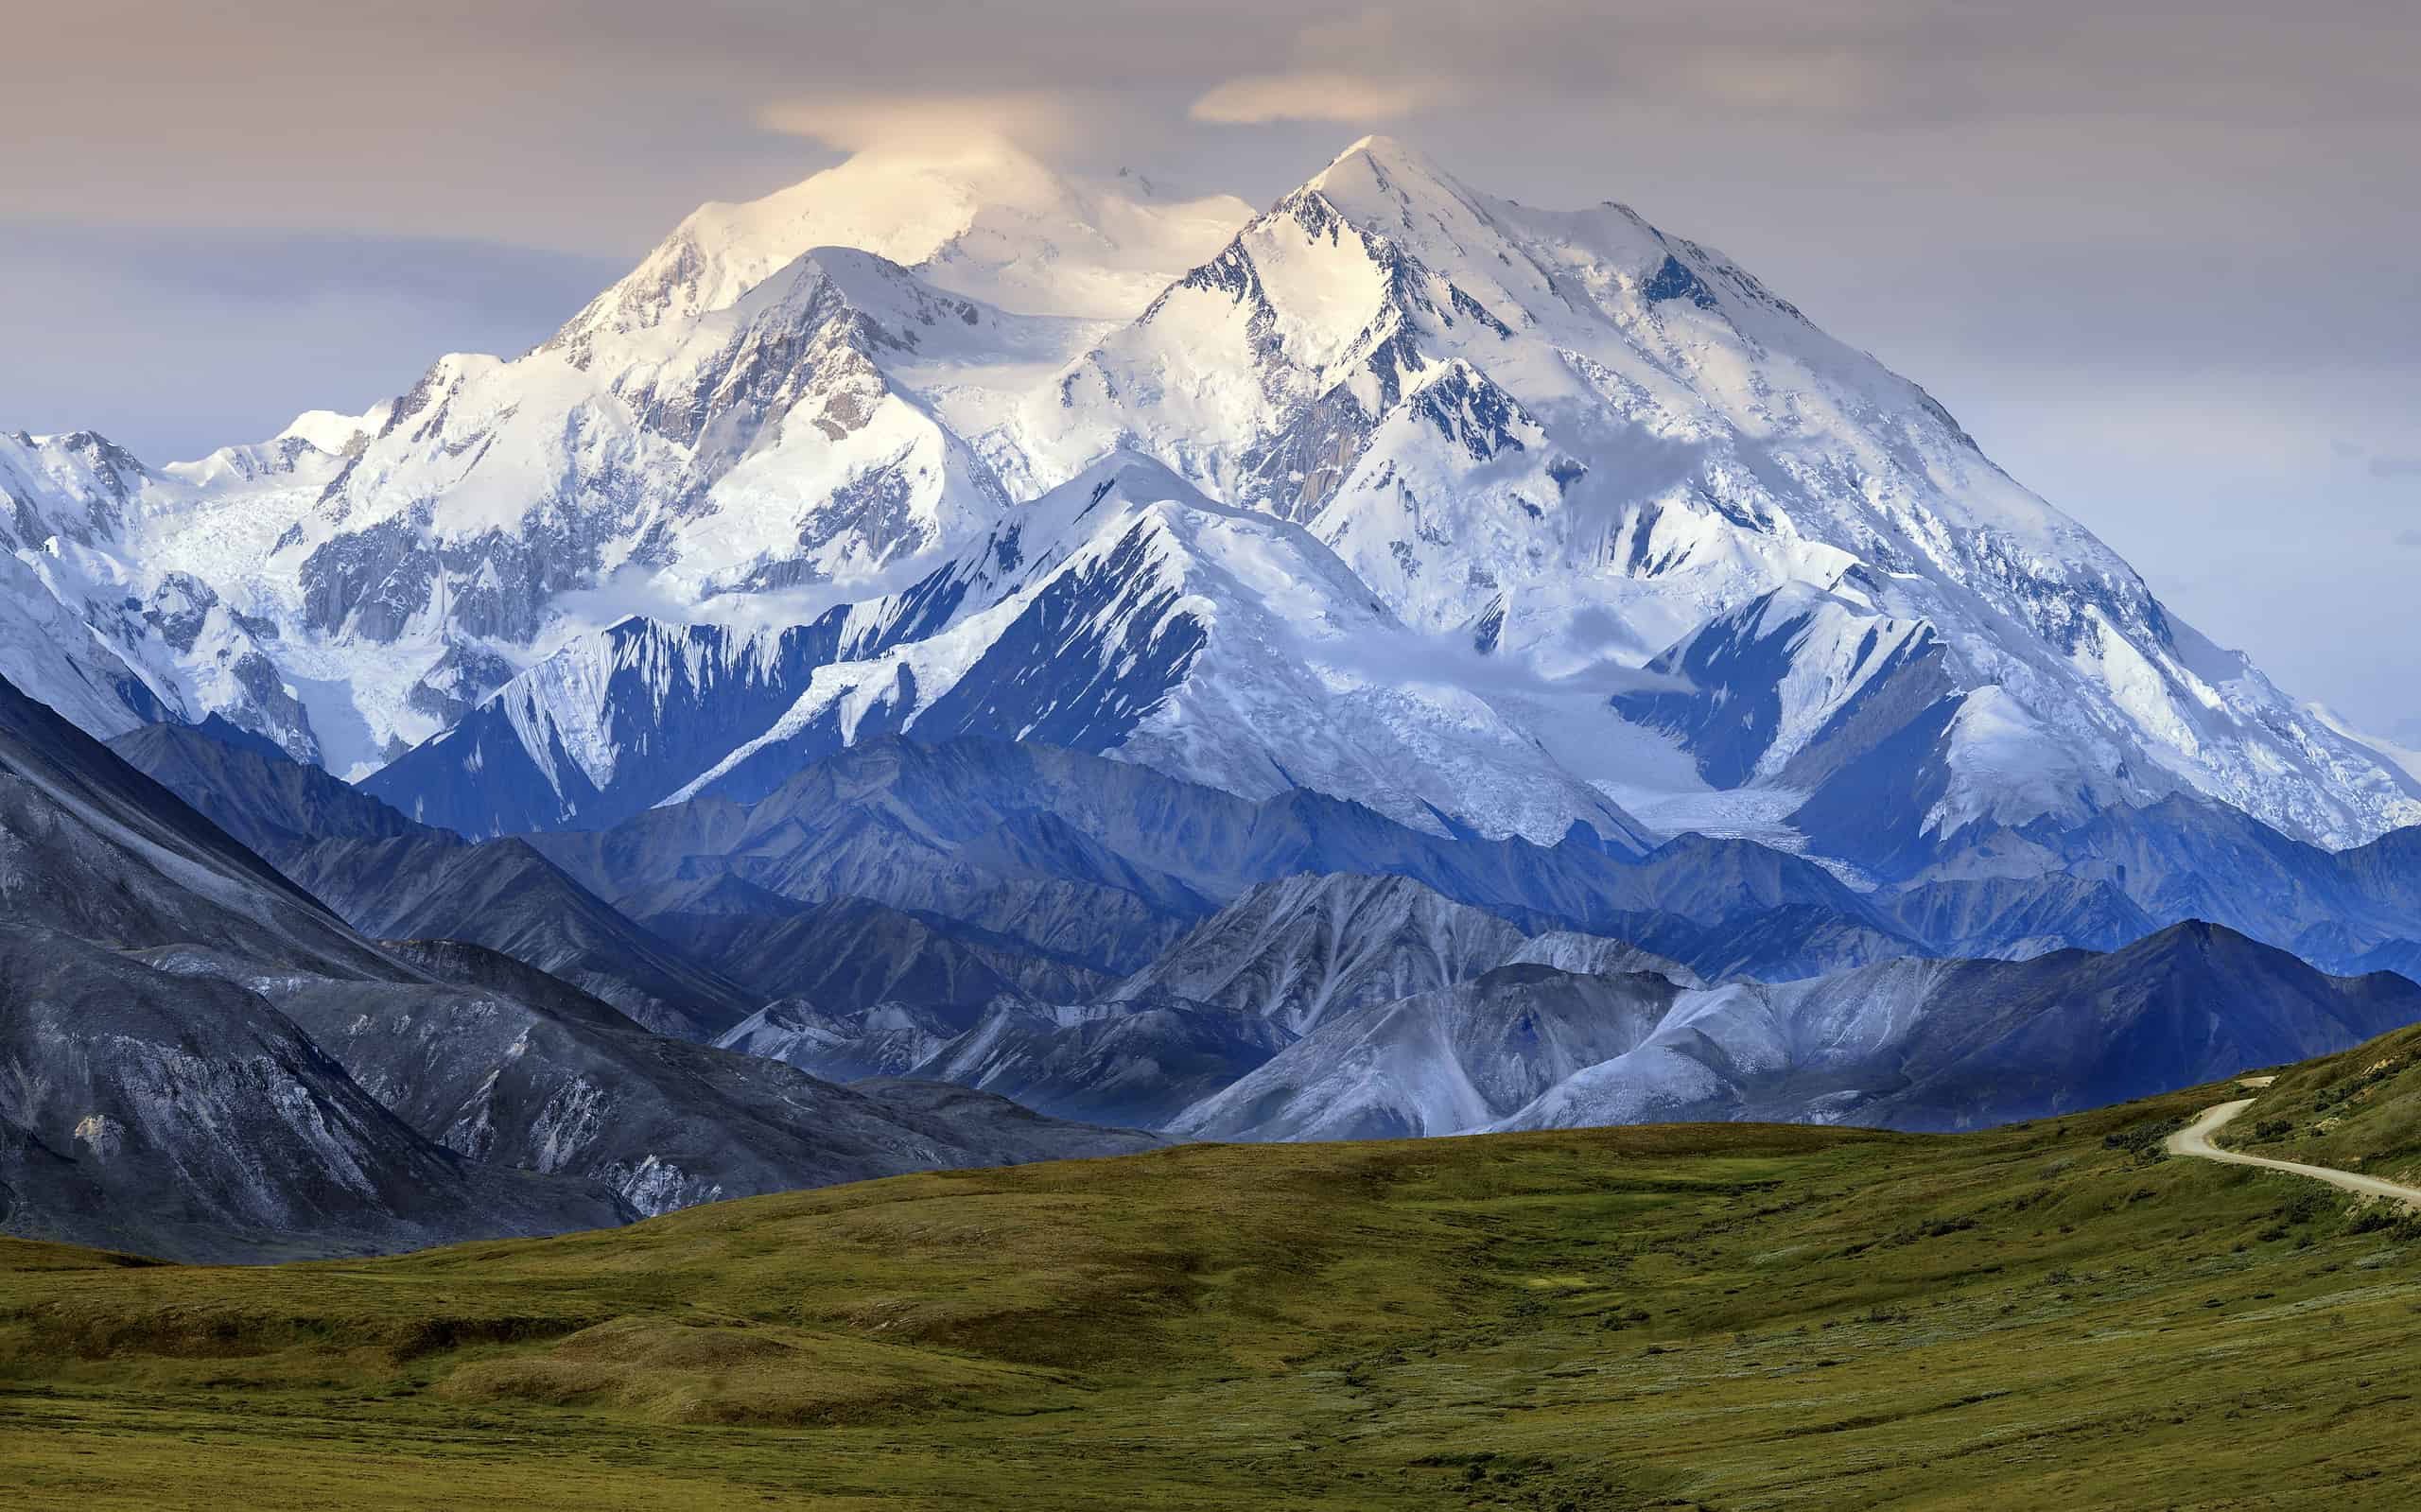 Denali (also known as Mount McKinley) - Alaska - USA